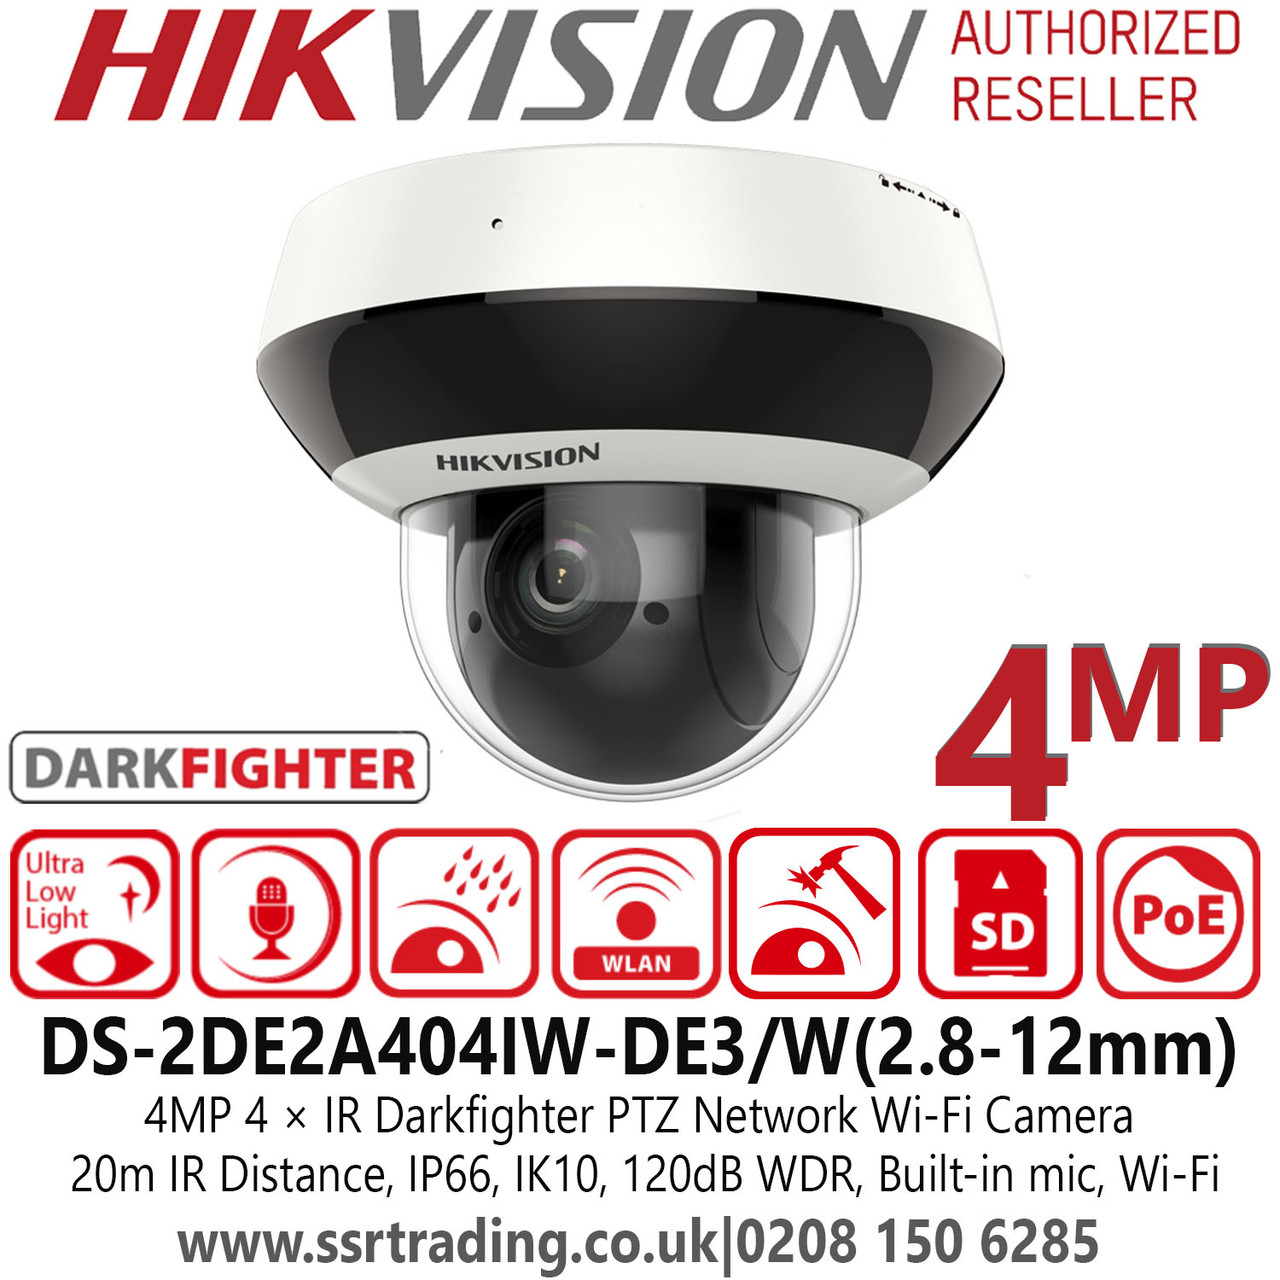 Hikvision Hikvision 4MP Darkfighter DS-2DE2A404IW-DE3 4x Zoom H.265 IP PTZ POE Camera 